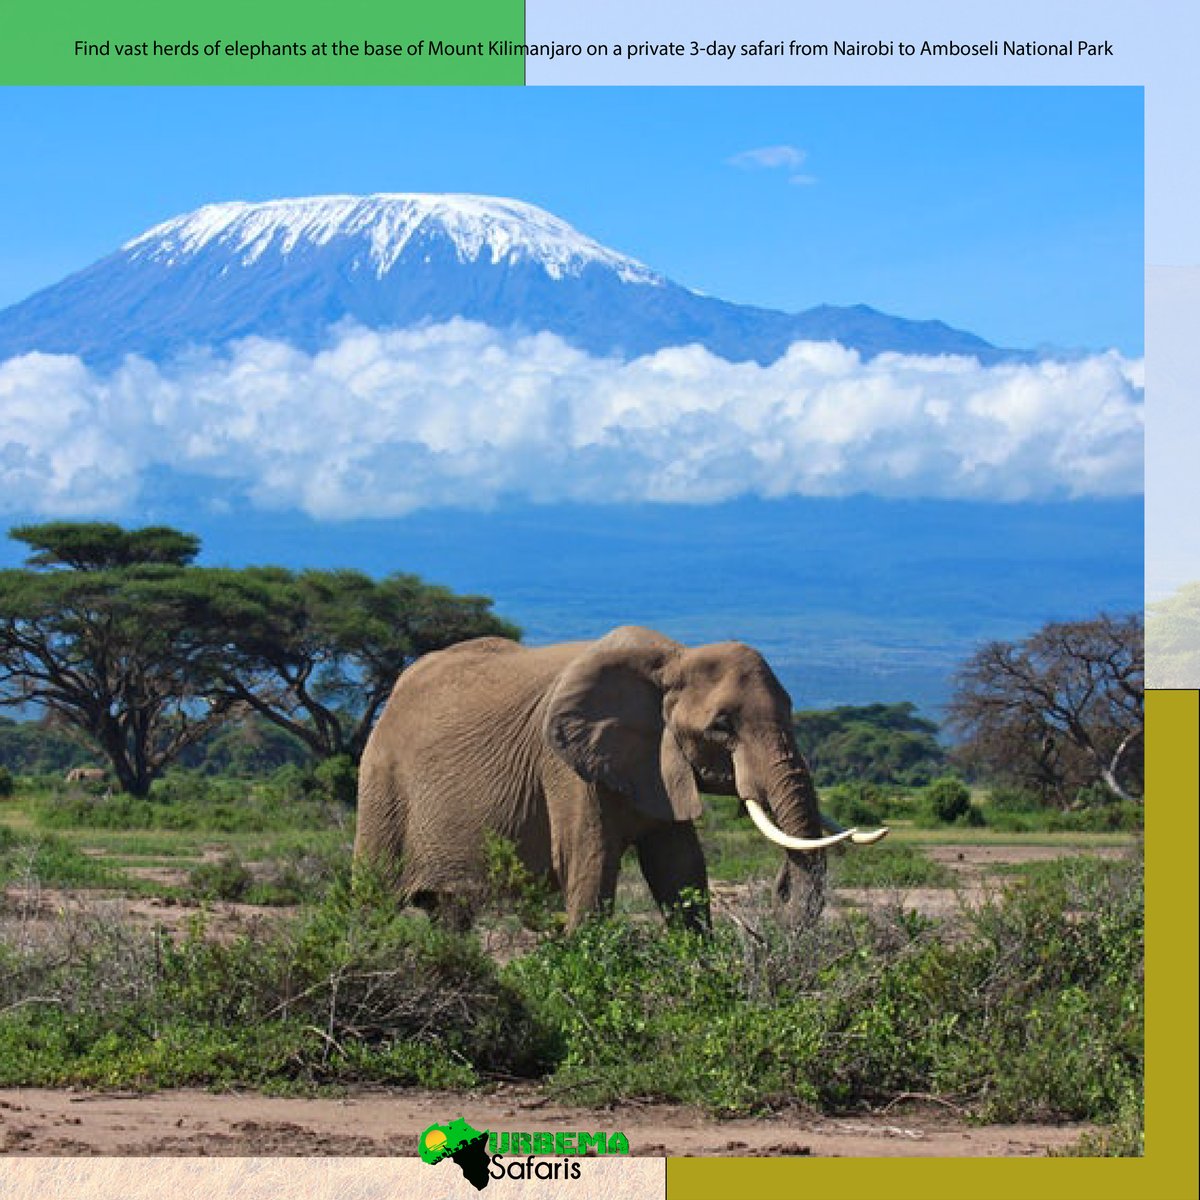 Find vast herds of elephants at the base of Mount Kilimanjaro on a private 3-day Safari from Nairobi to Amboseli National Park: ow.ly/sbBF50F1K3g

#safari #kenyasafari #wildlifephotography #amboselinationalpark #amboselielephants #magicalkenya #TembeaKenya